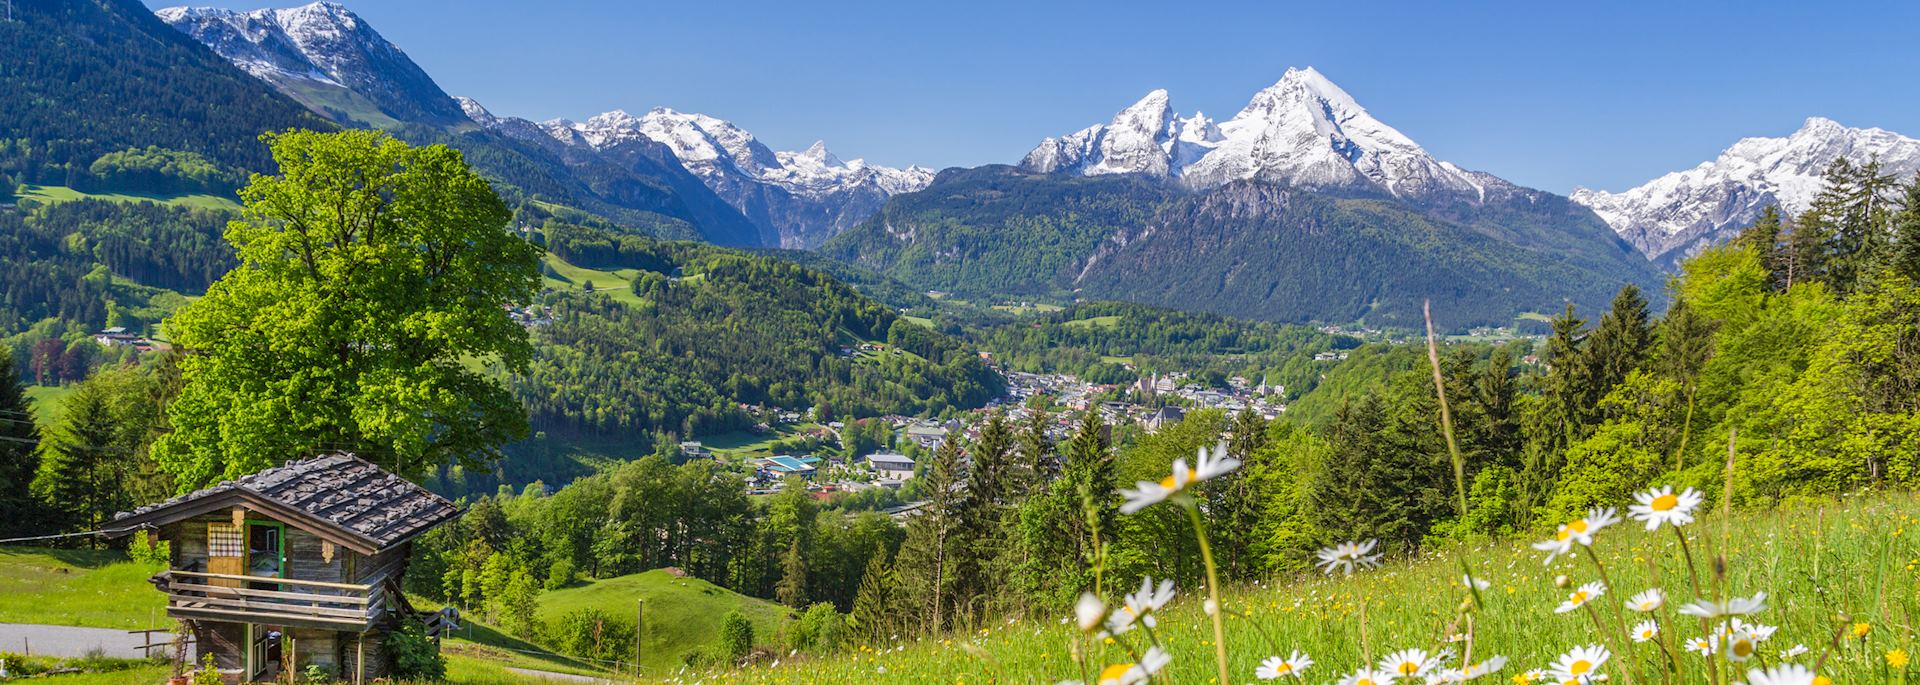 Scenery in the Austrian Alps